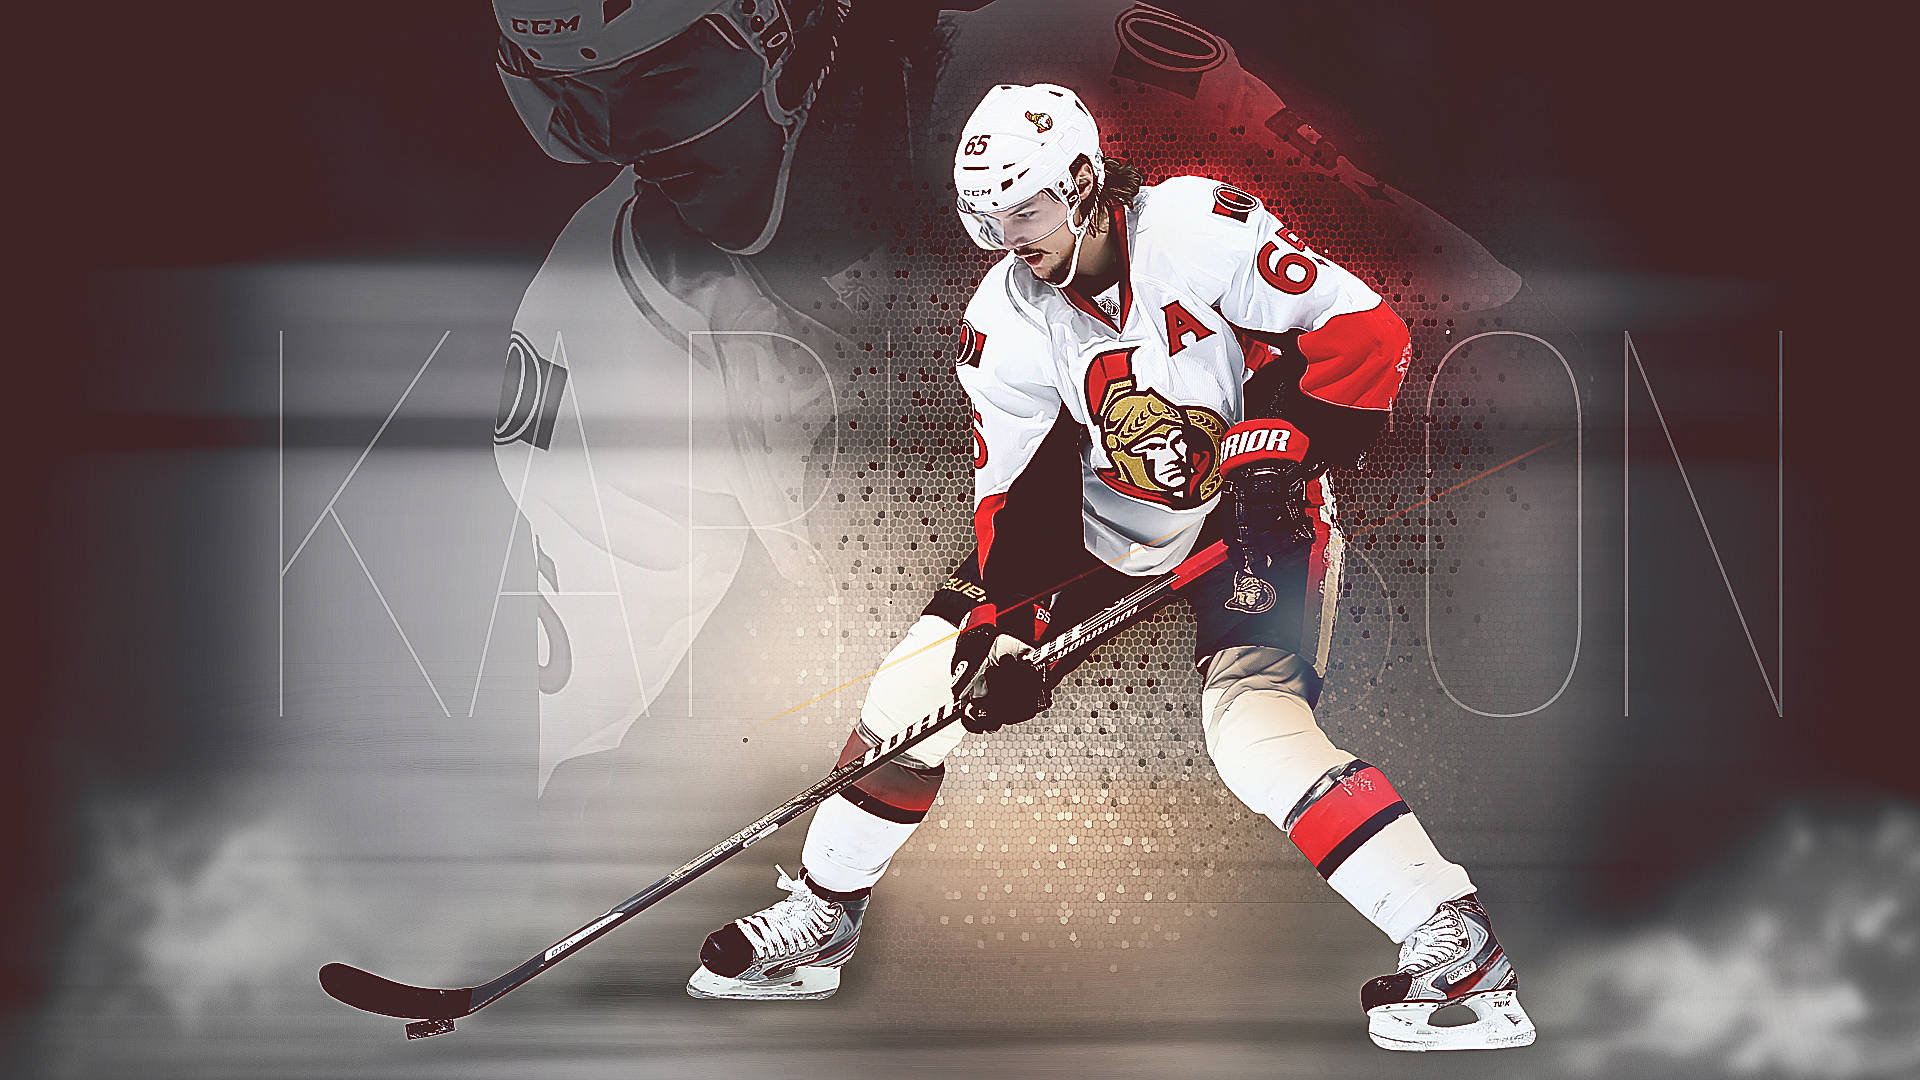 Pósterde Fanart De Erik Karlsson De Los Ottawa Senators De Hockey Sobre Hielo. Fondo de pantalla